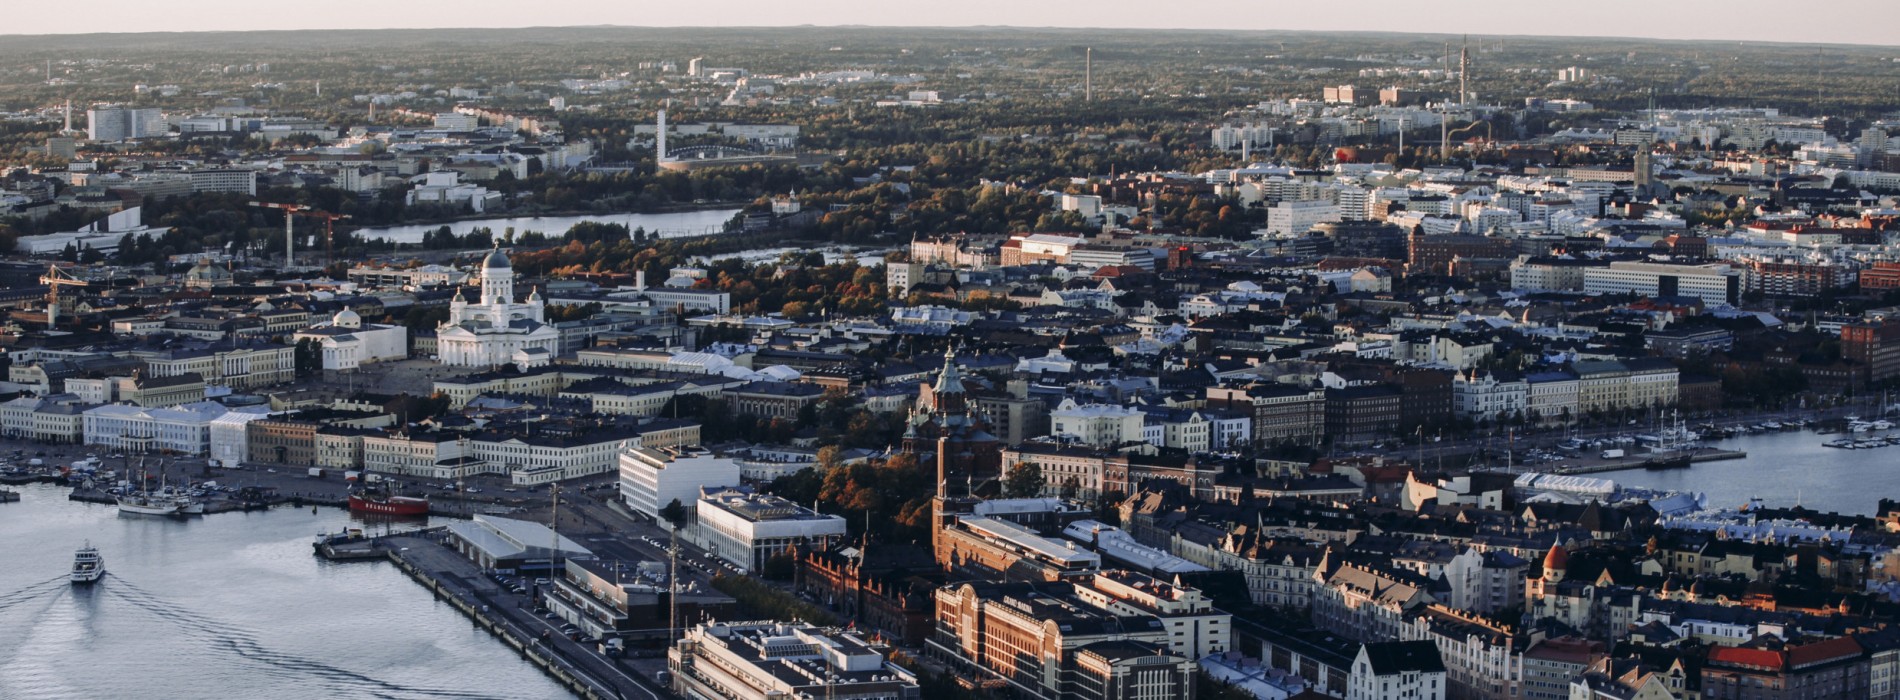 Helsinki wins European Capital of Smart Tourism 2019 competition